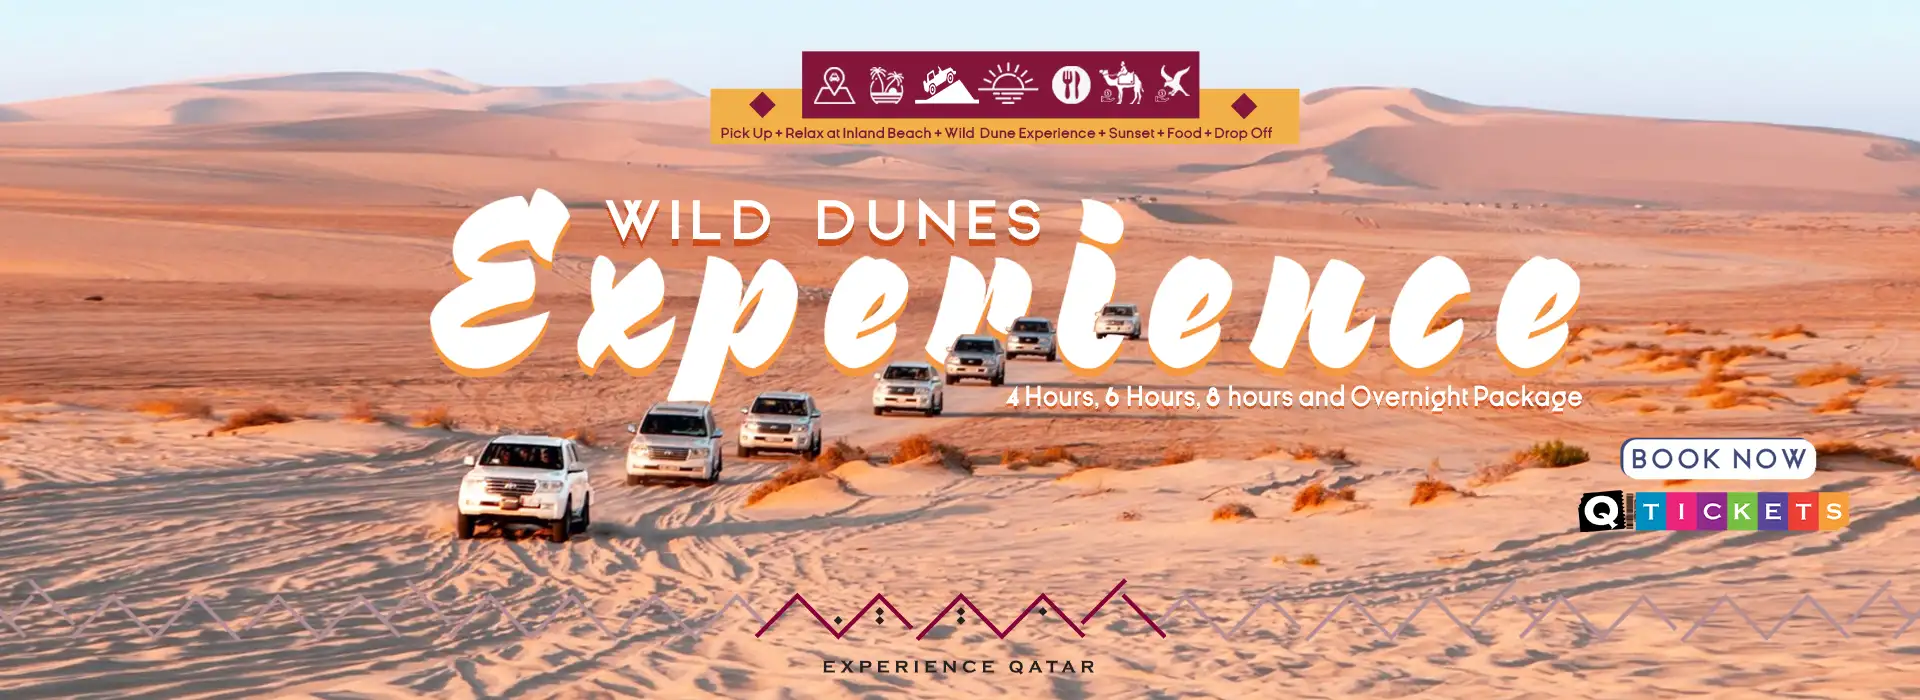 Wild Dunes Shared Desert Safari